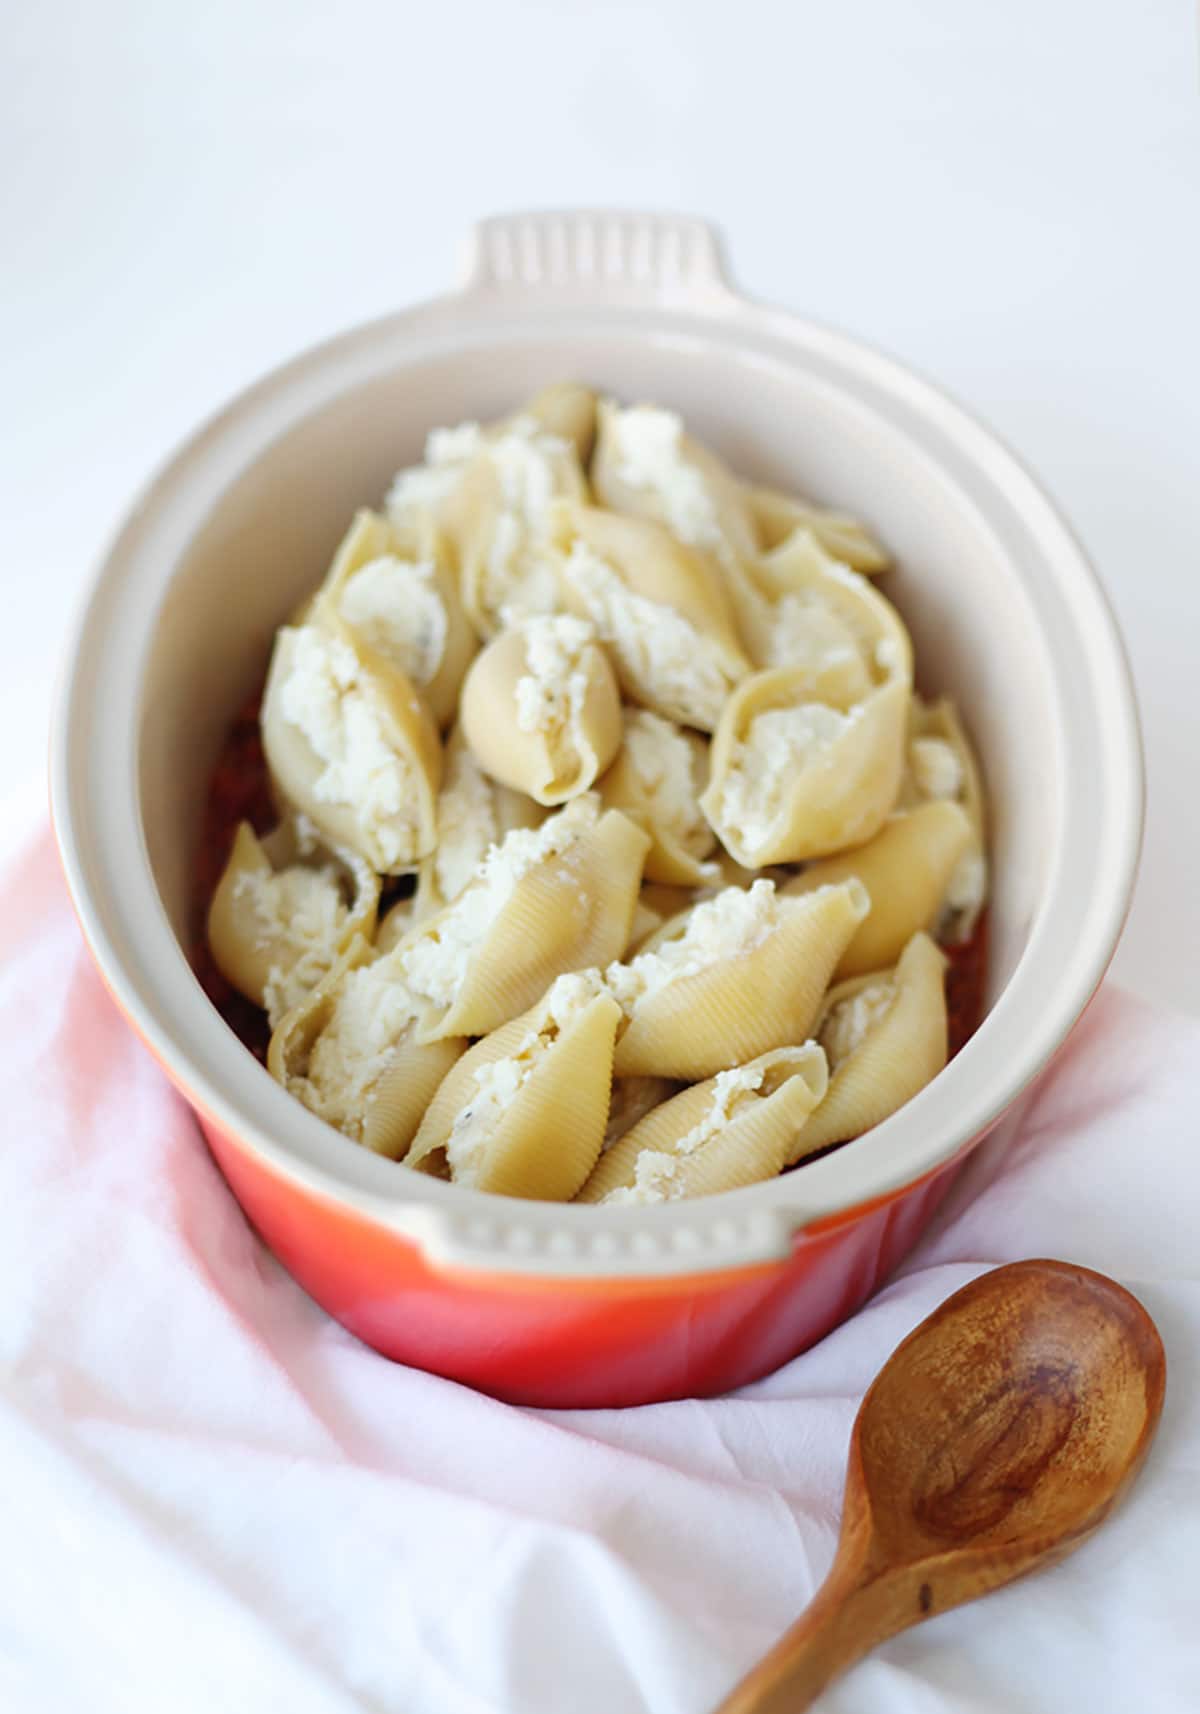 Easy stuffed shells in pasta recipe that kids love